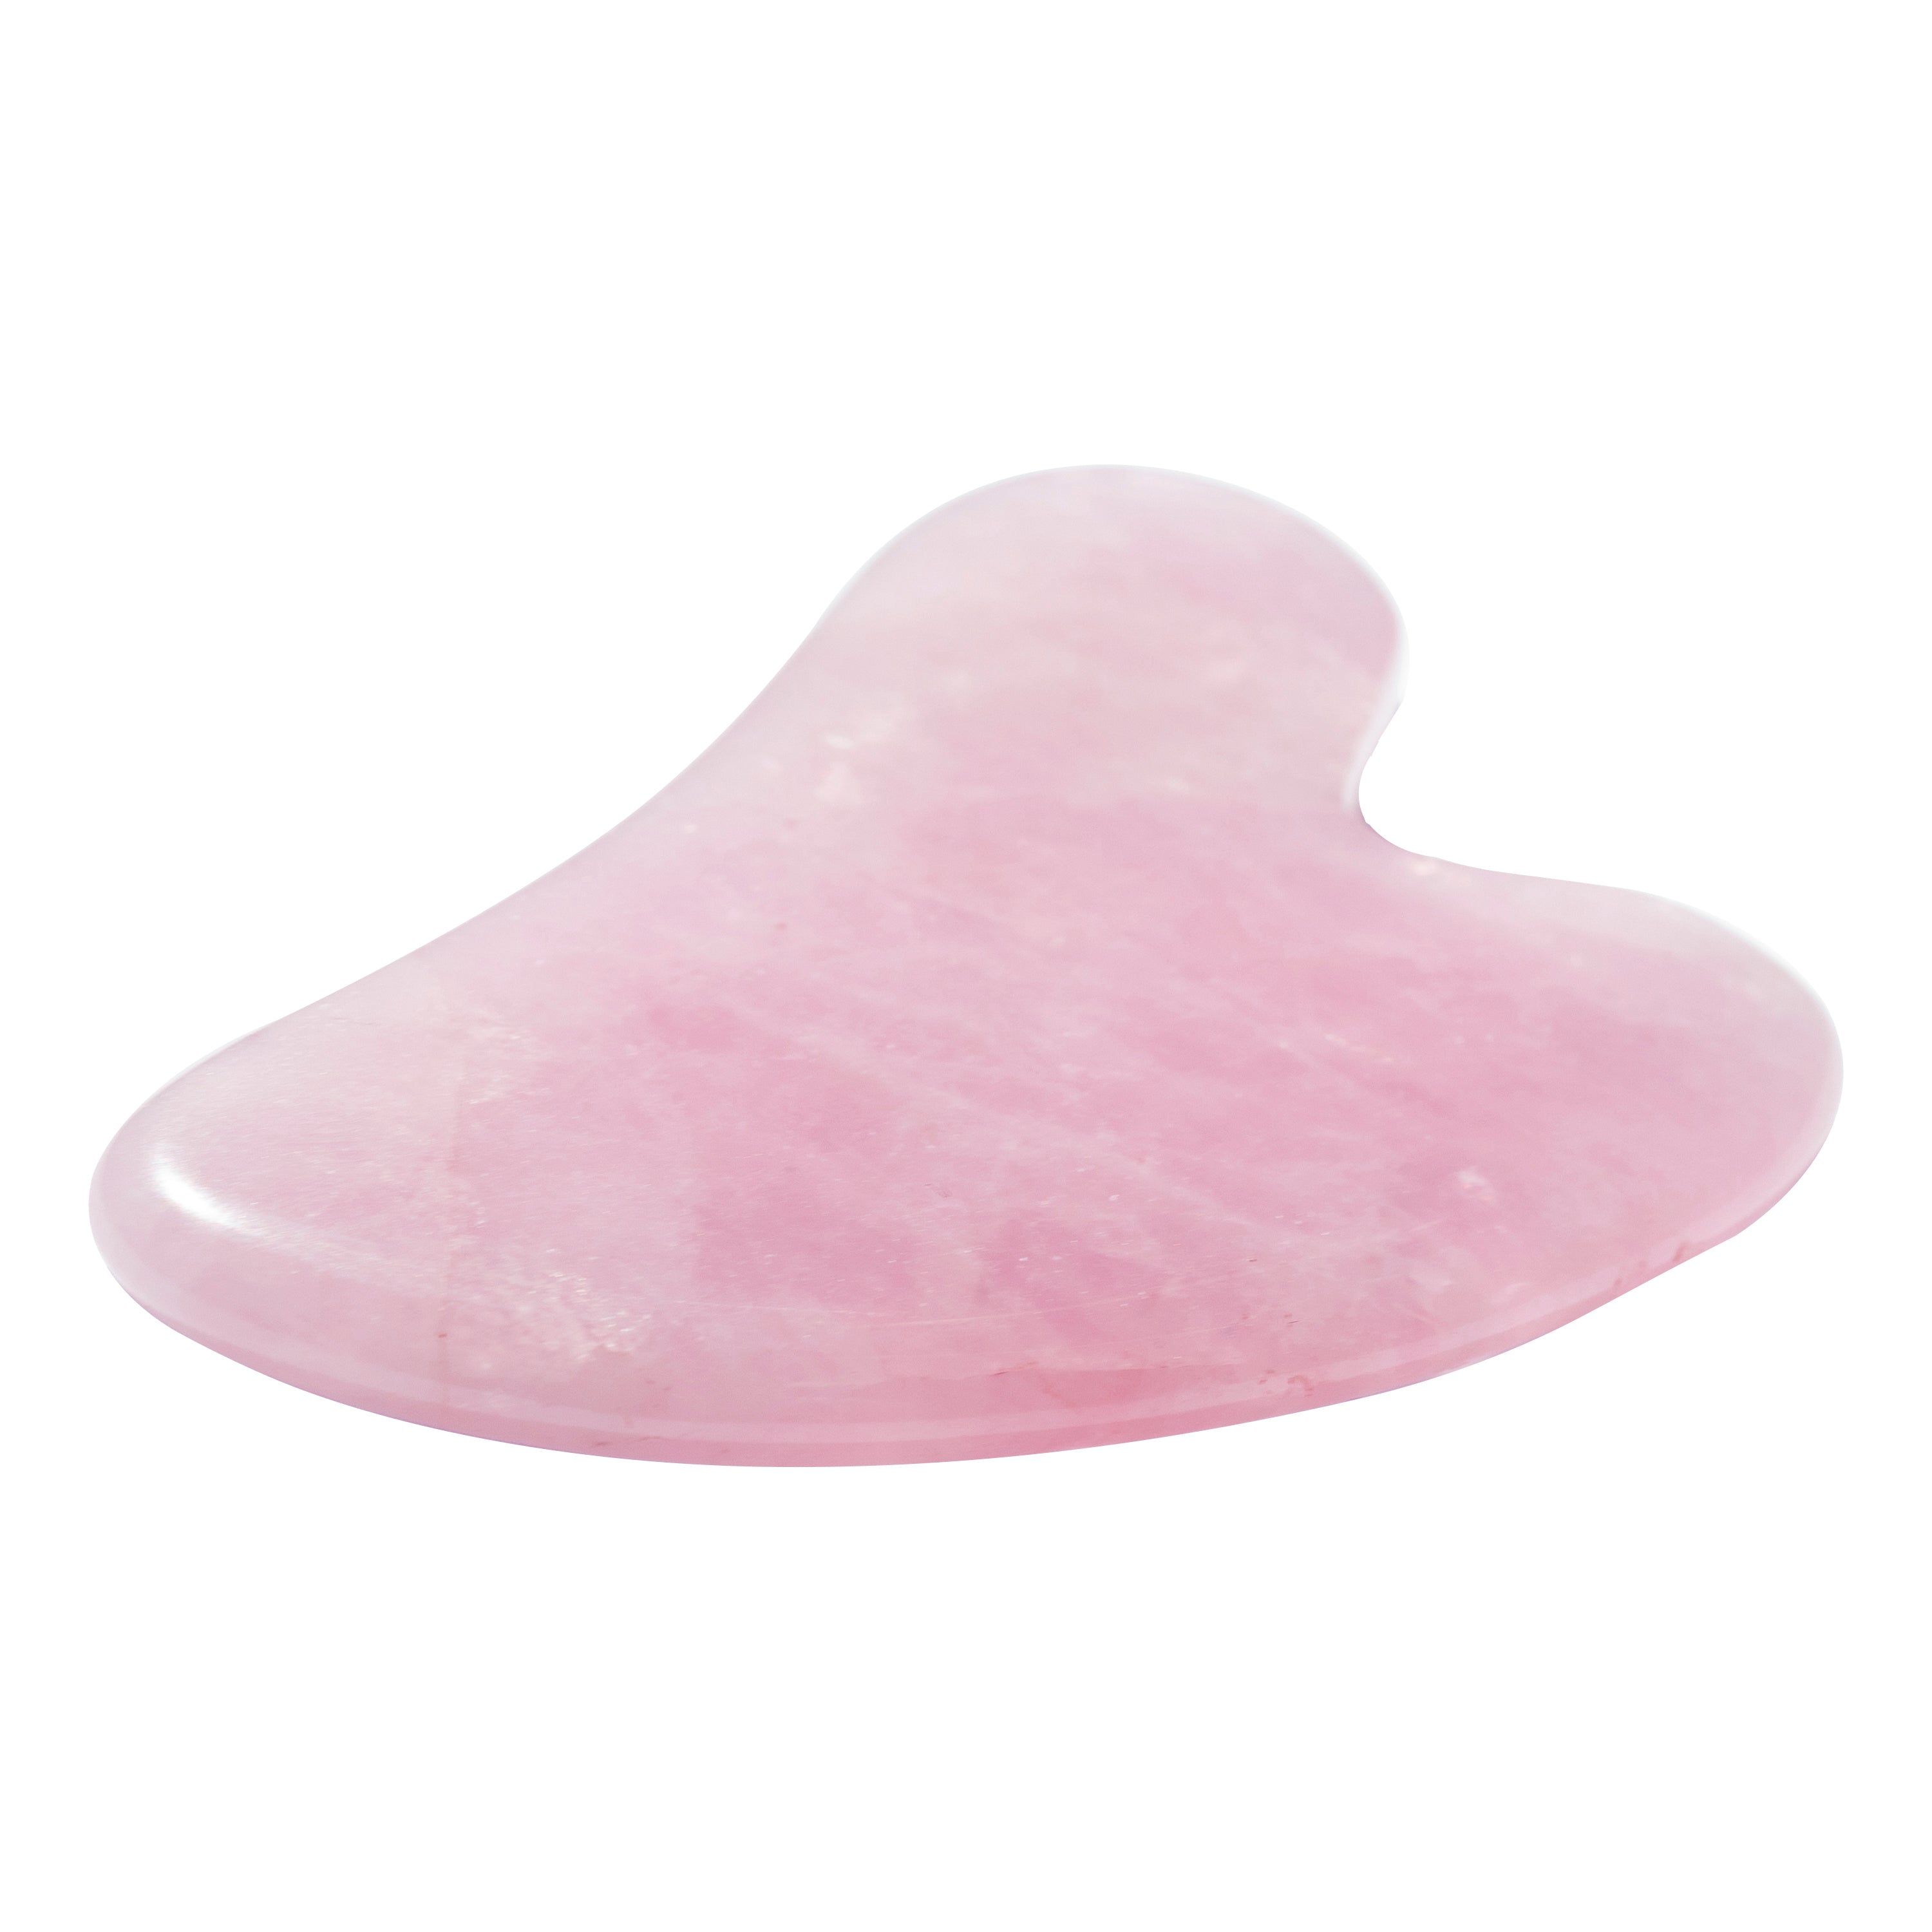 Guasha Scraping Massage Tool – Rose Quartz Gua Sha Board - Traditional Scraper Tool for Anti-Aging - 100% Natural Pink Quartz Stone Guasha - Gasha Massage Stones by Sandine